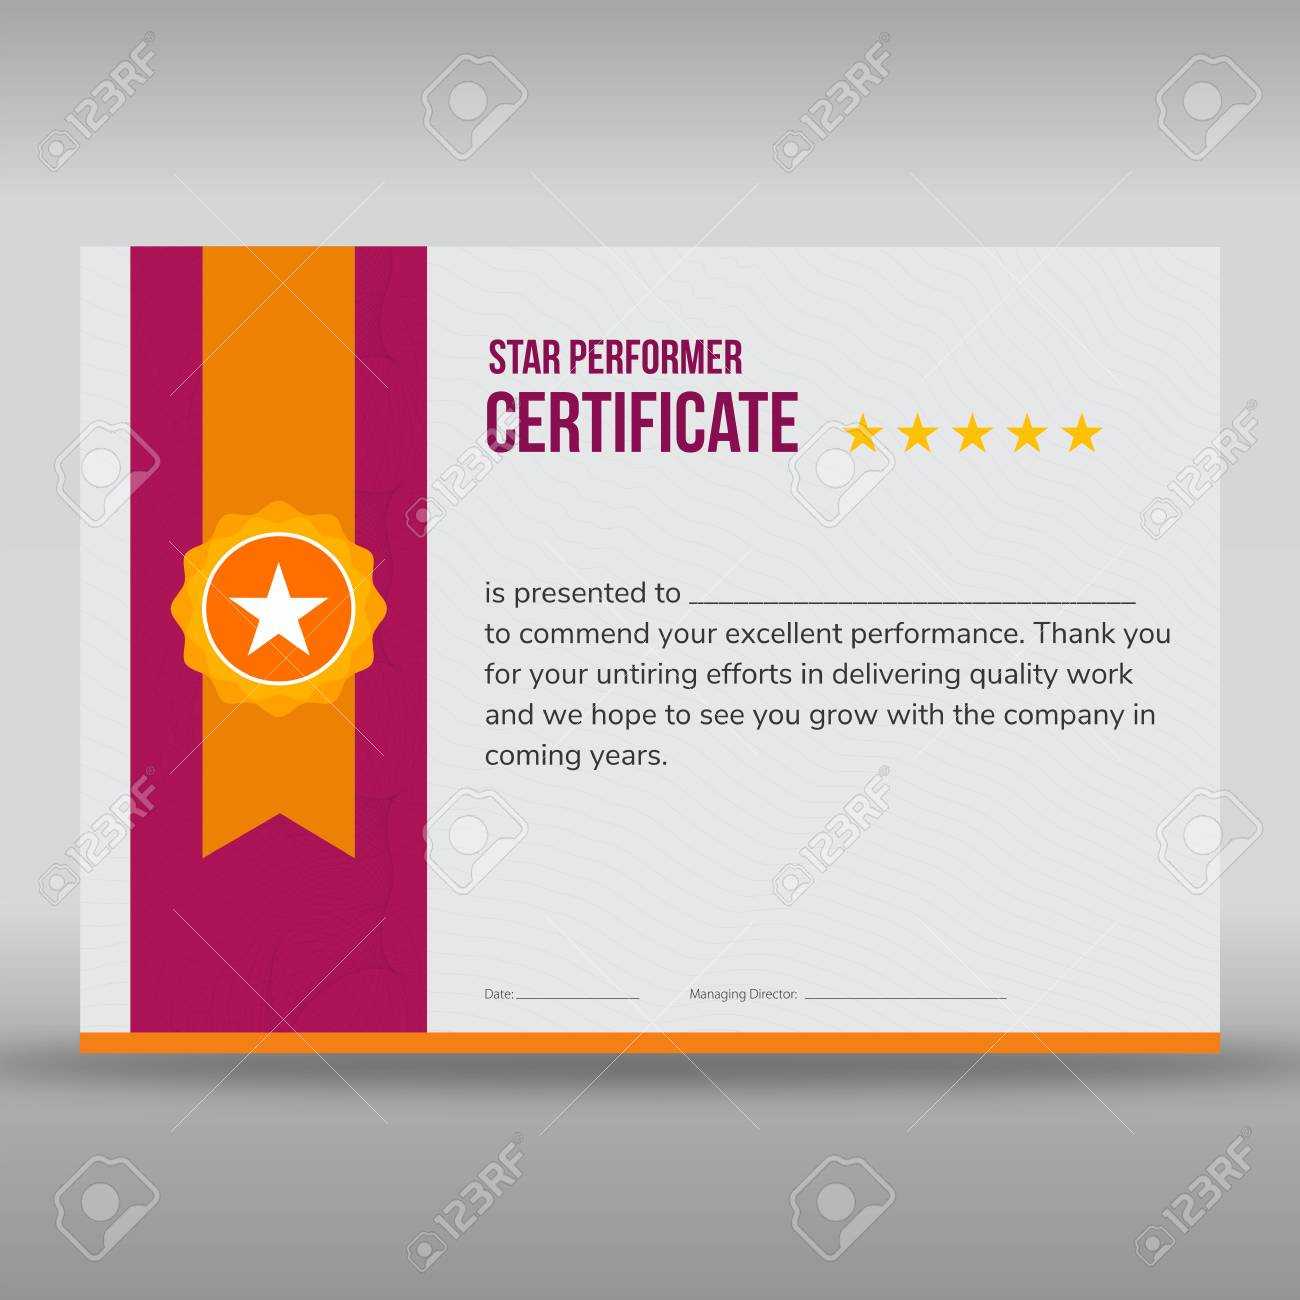 Star Performer Certificate Templates – Calep.midnightpig.co Within Star Performer Certificate Templates